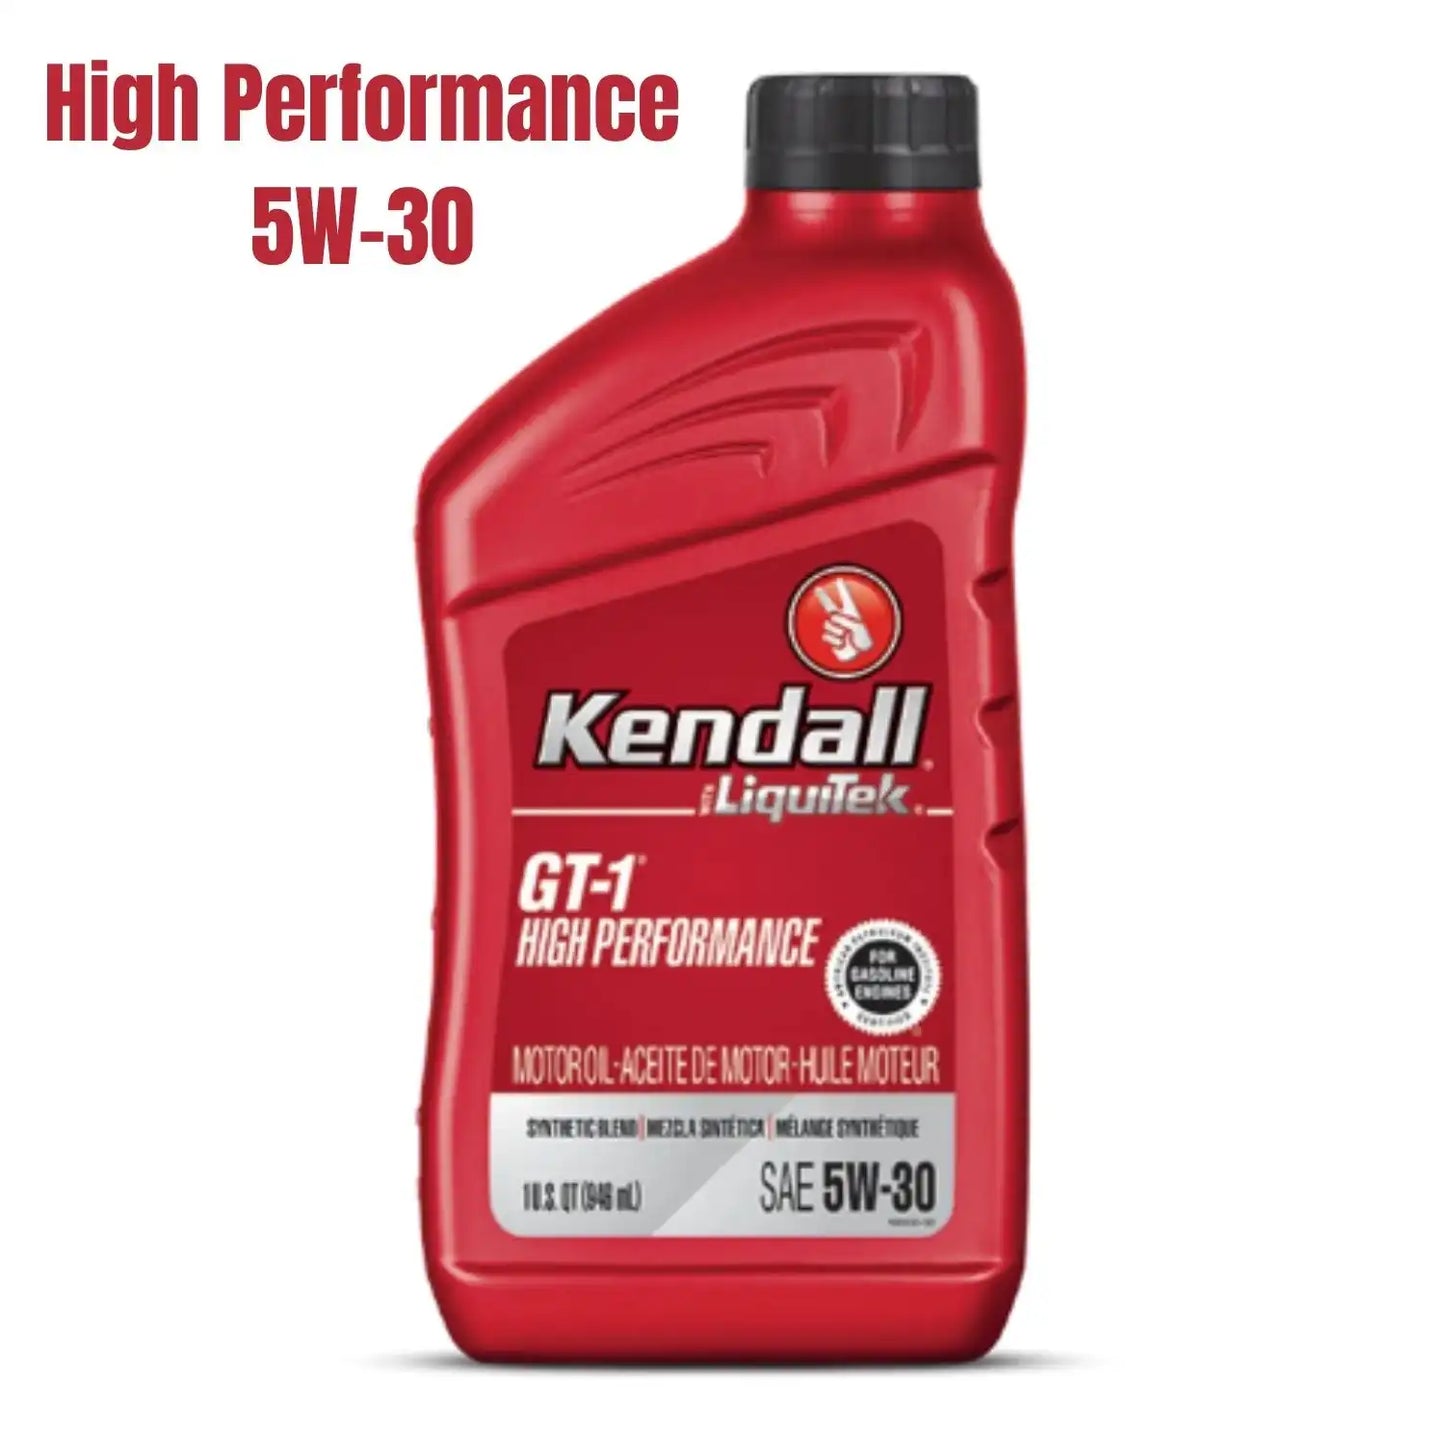 Kendall Gt-1 5W-30 High Performance Car Engine Oil (1 Liter)